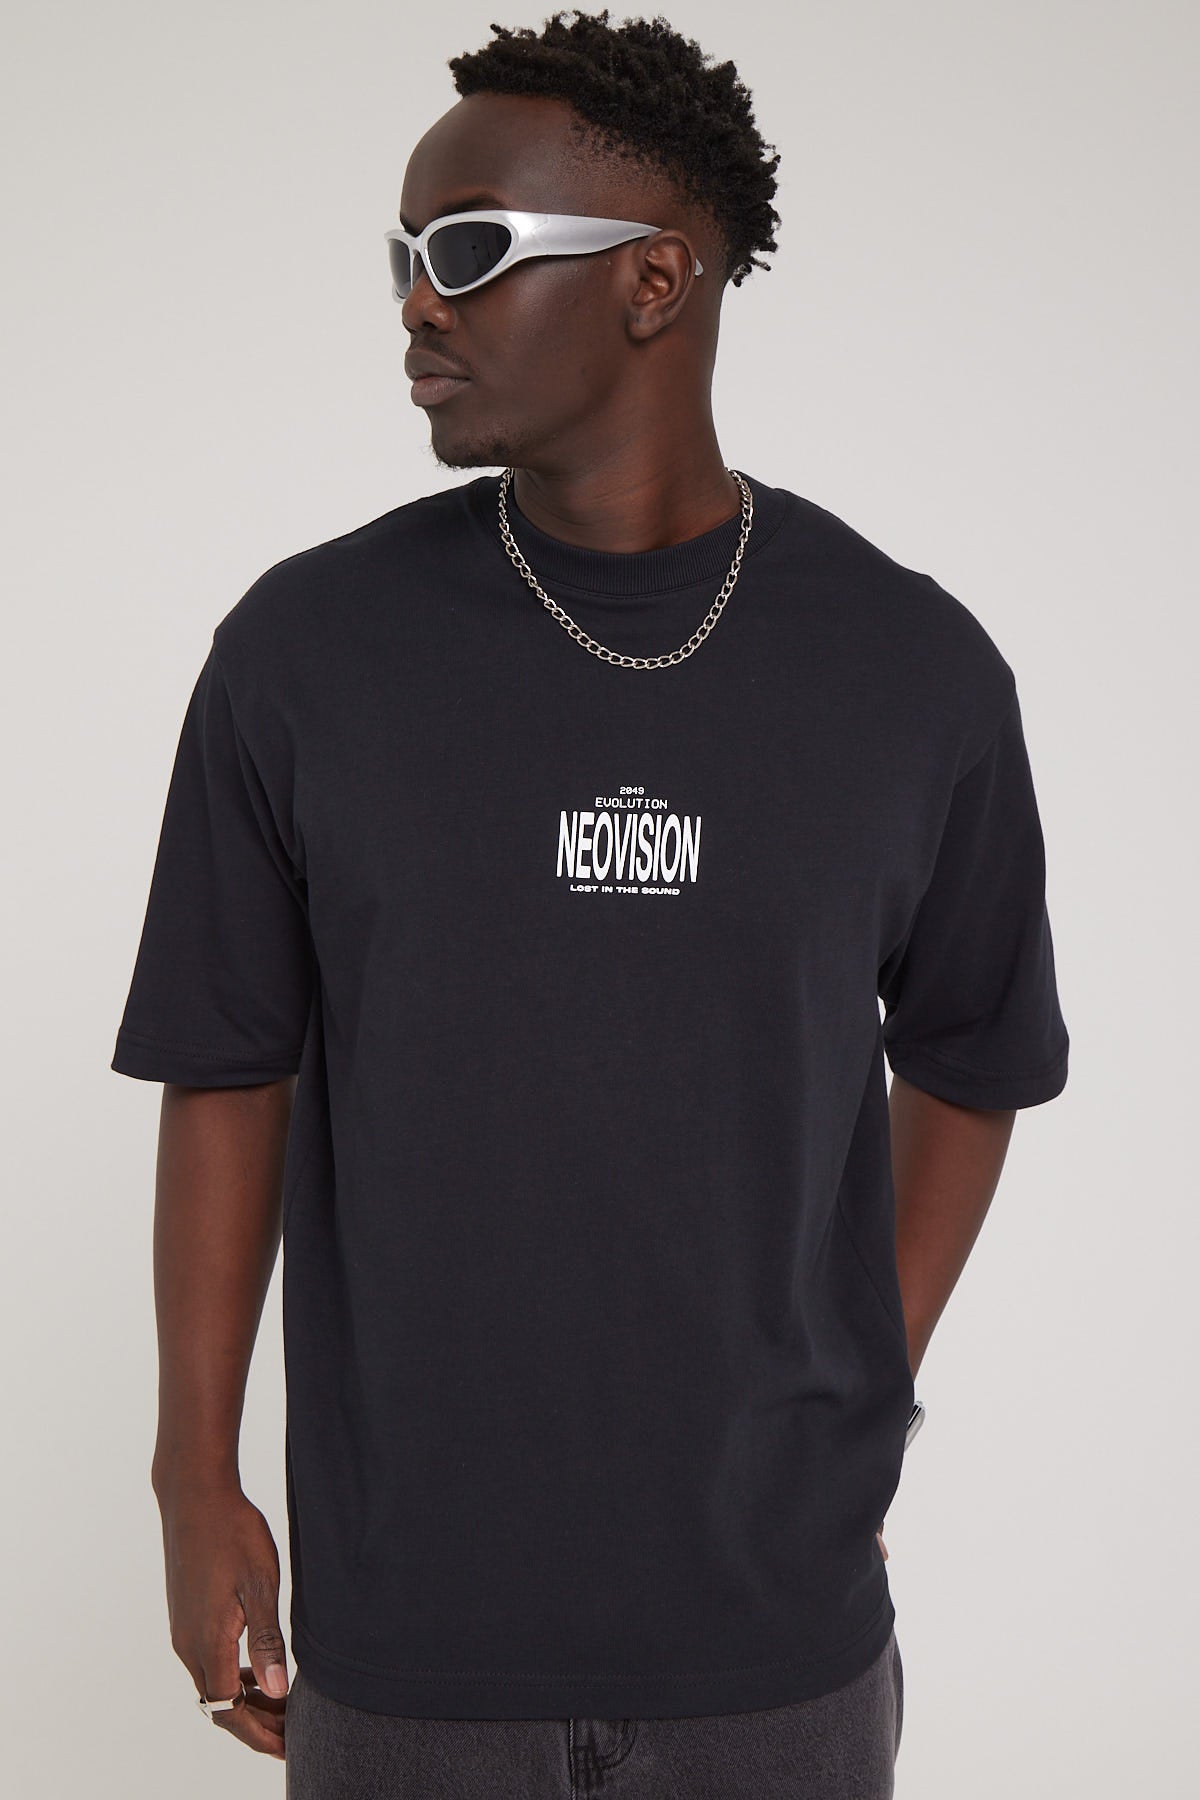 Men's T-Shirts  Graphic, Basic & Oversized Tees – Universal Store